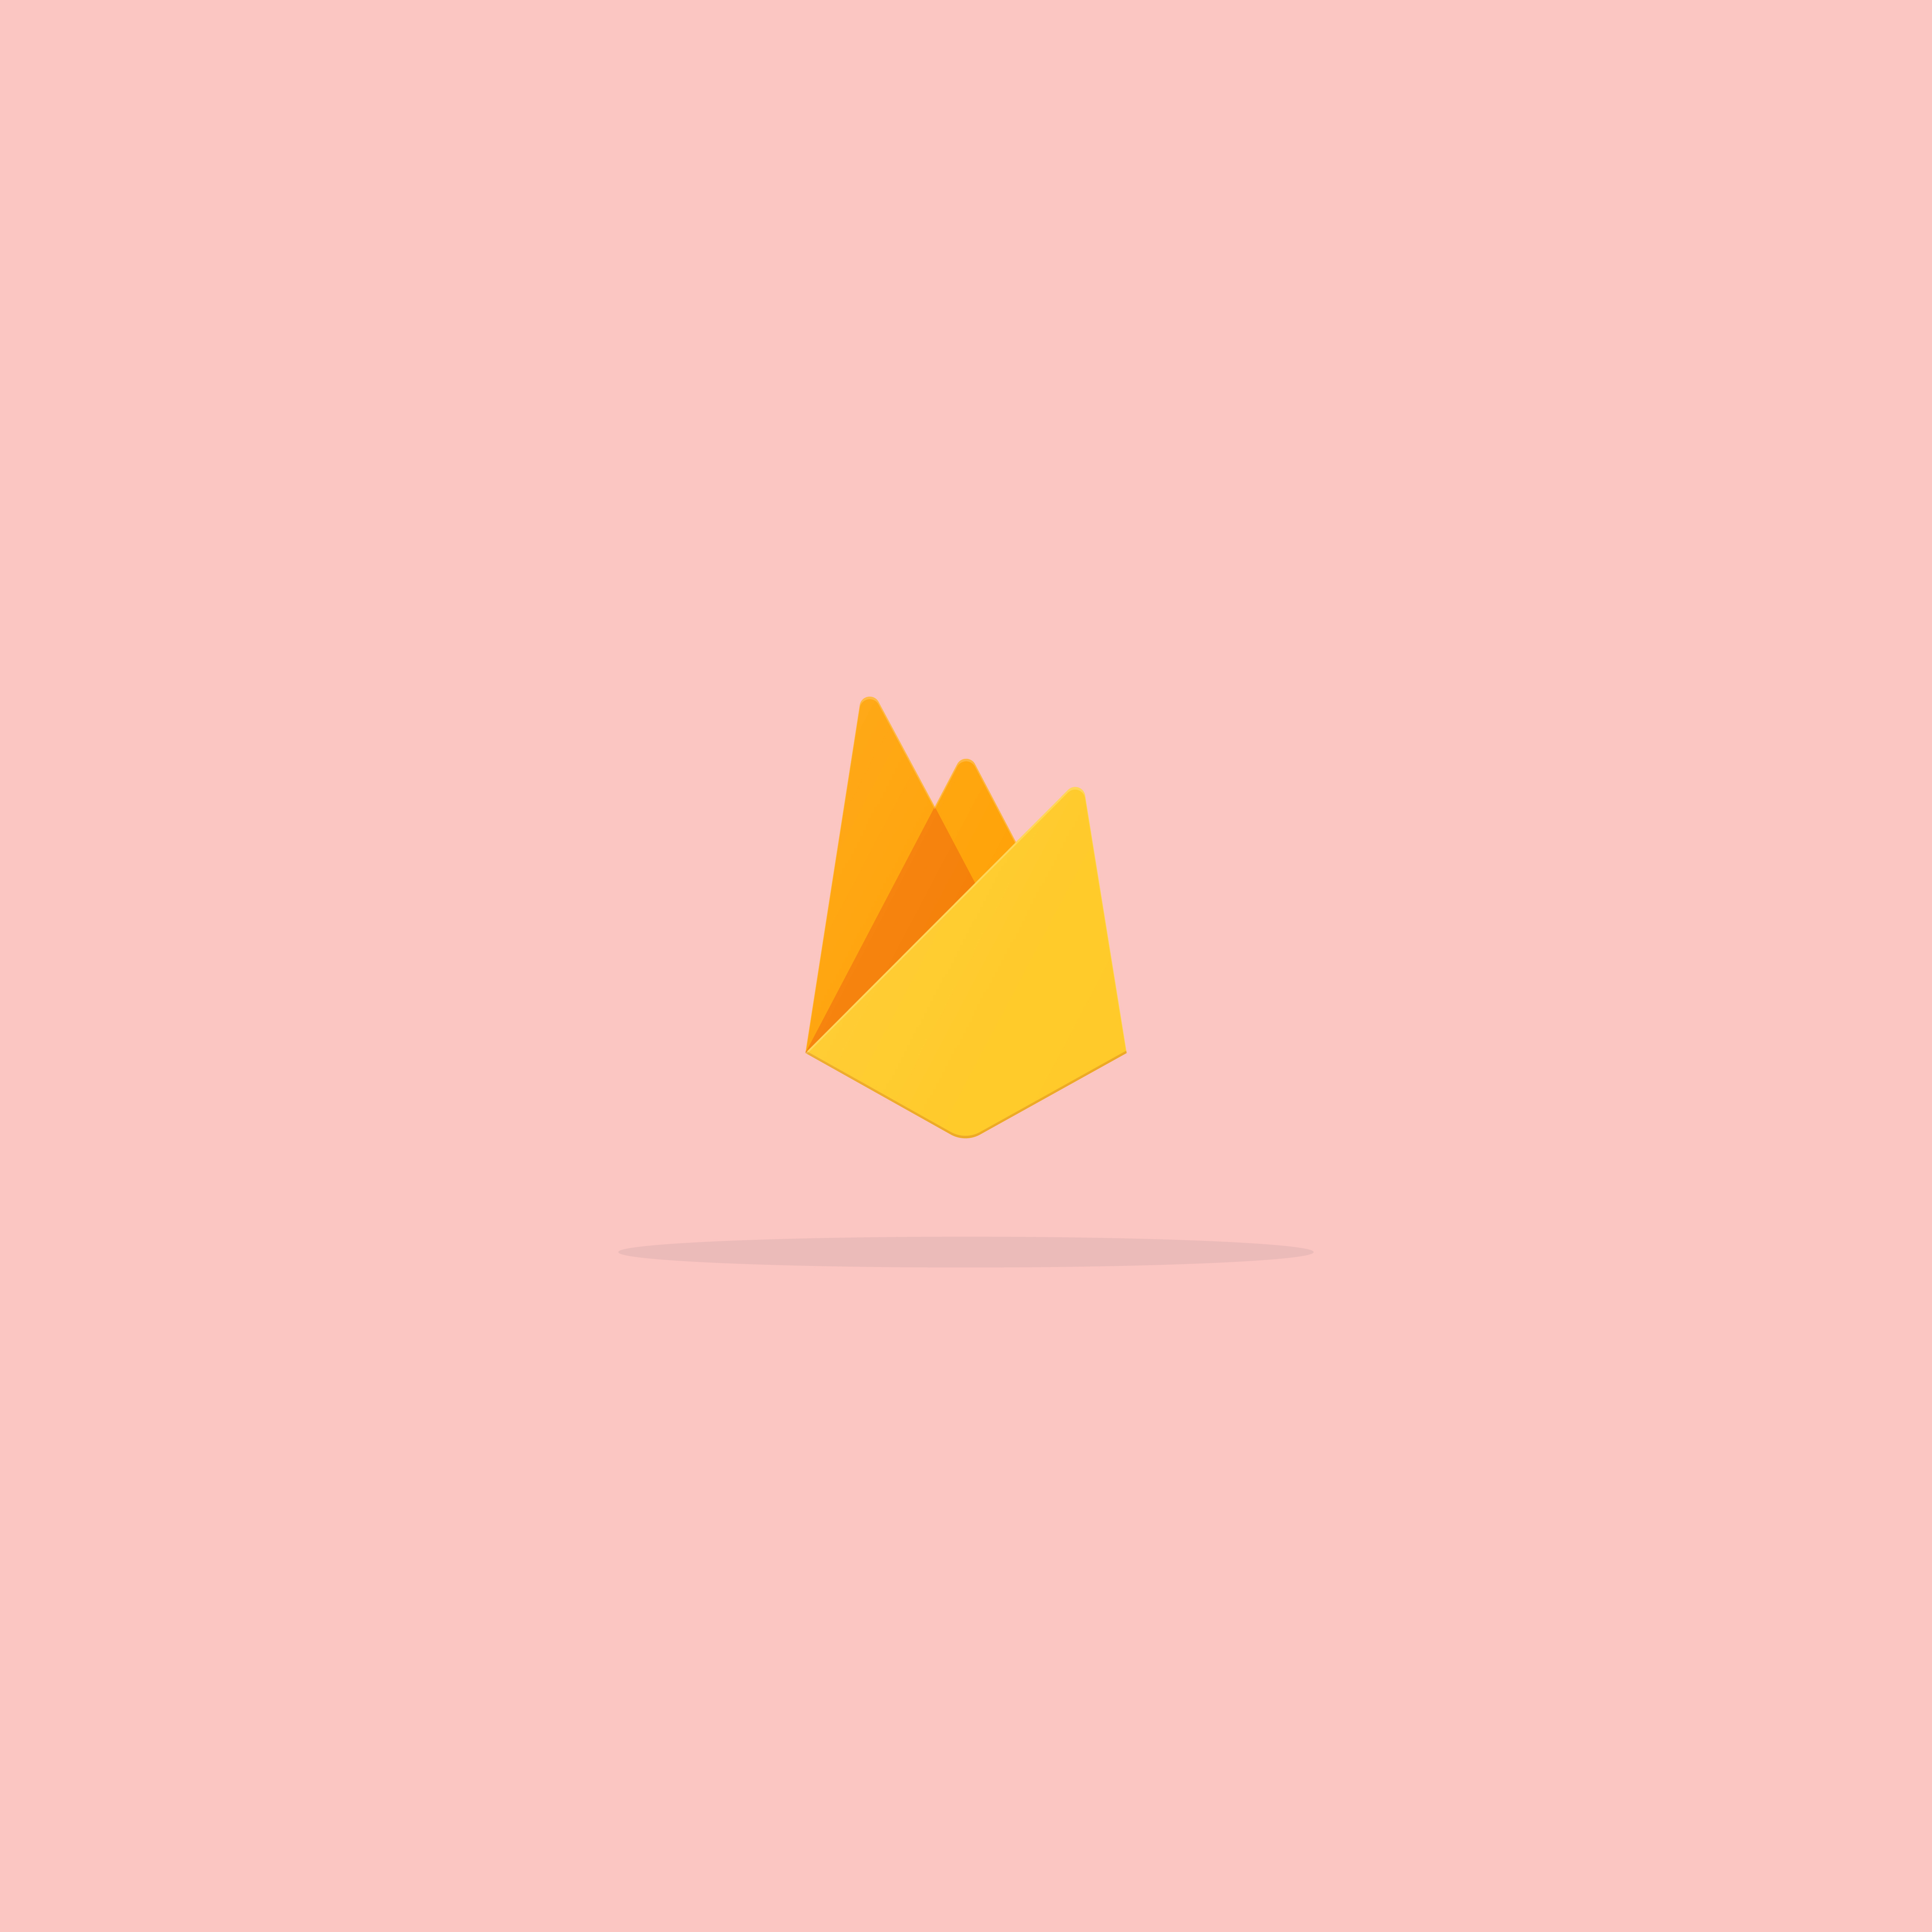 How to Use Firebase Analytics?